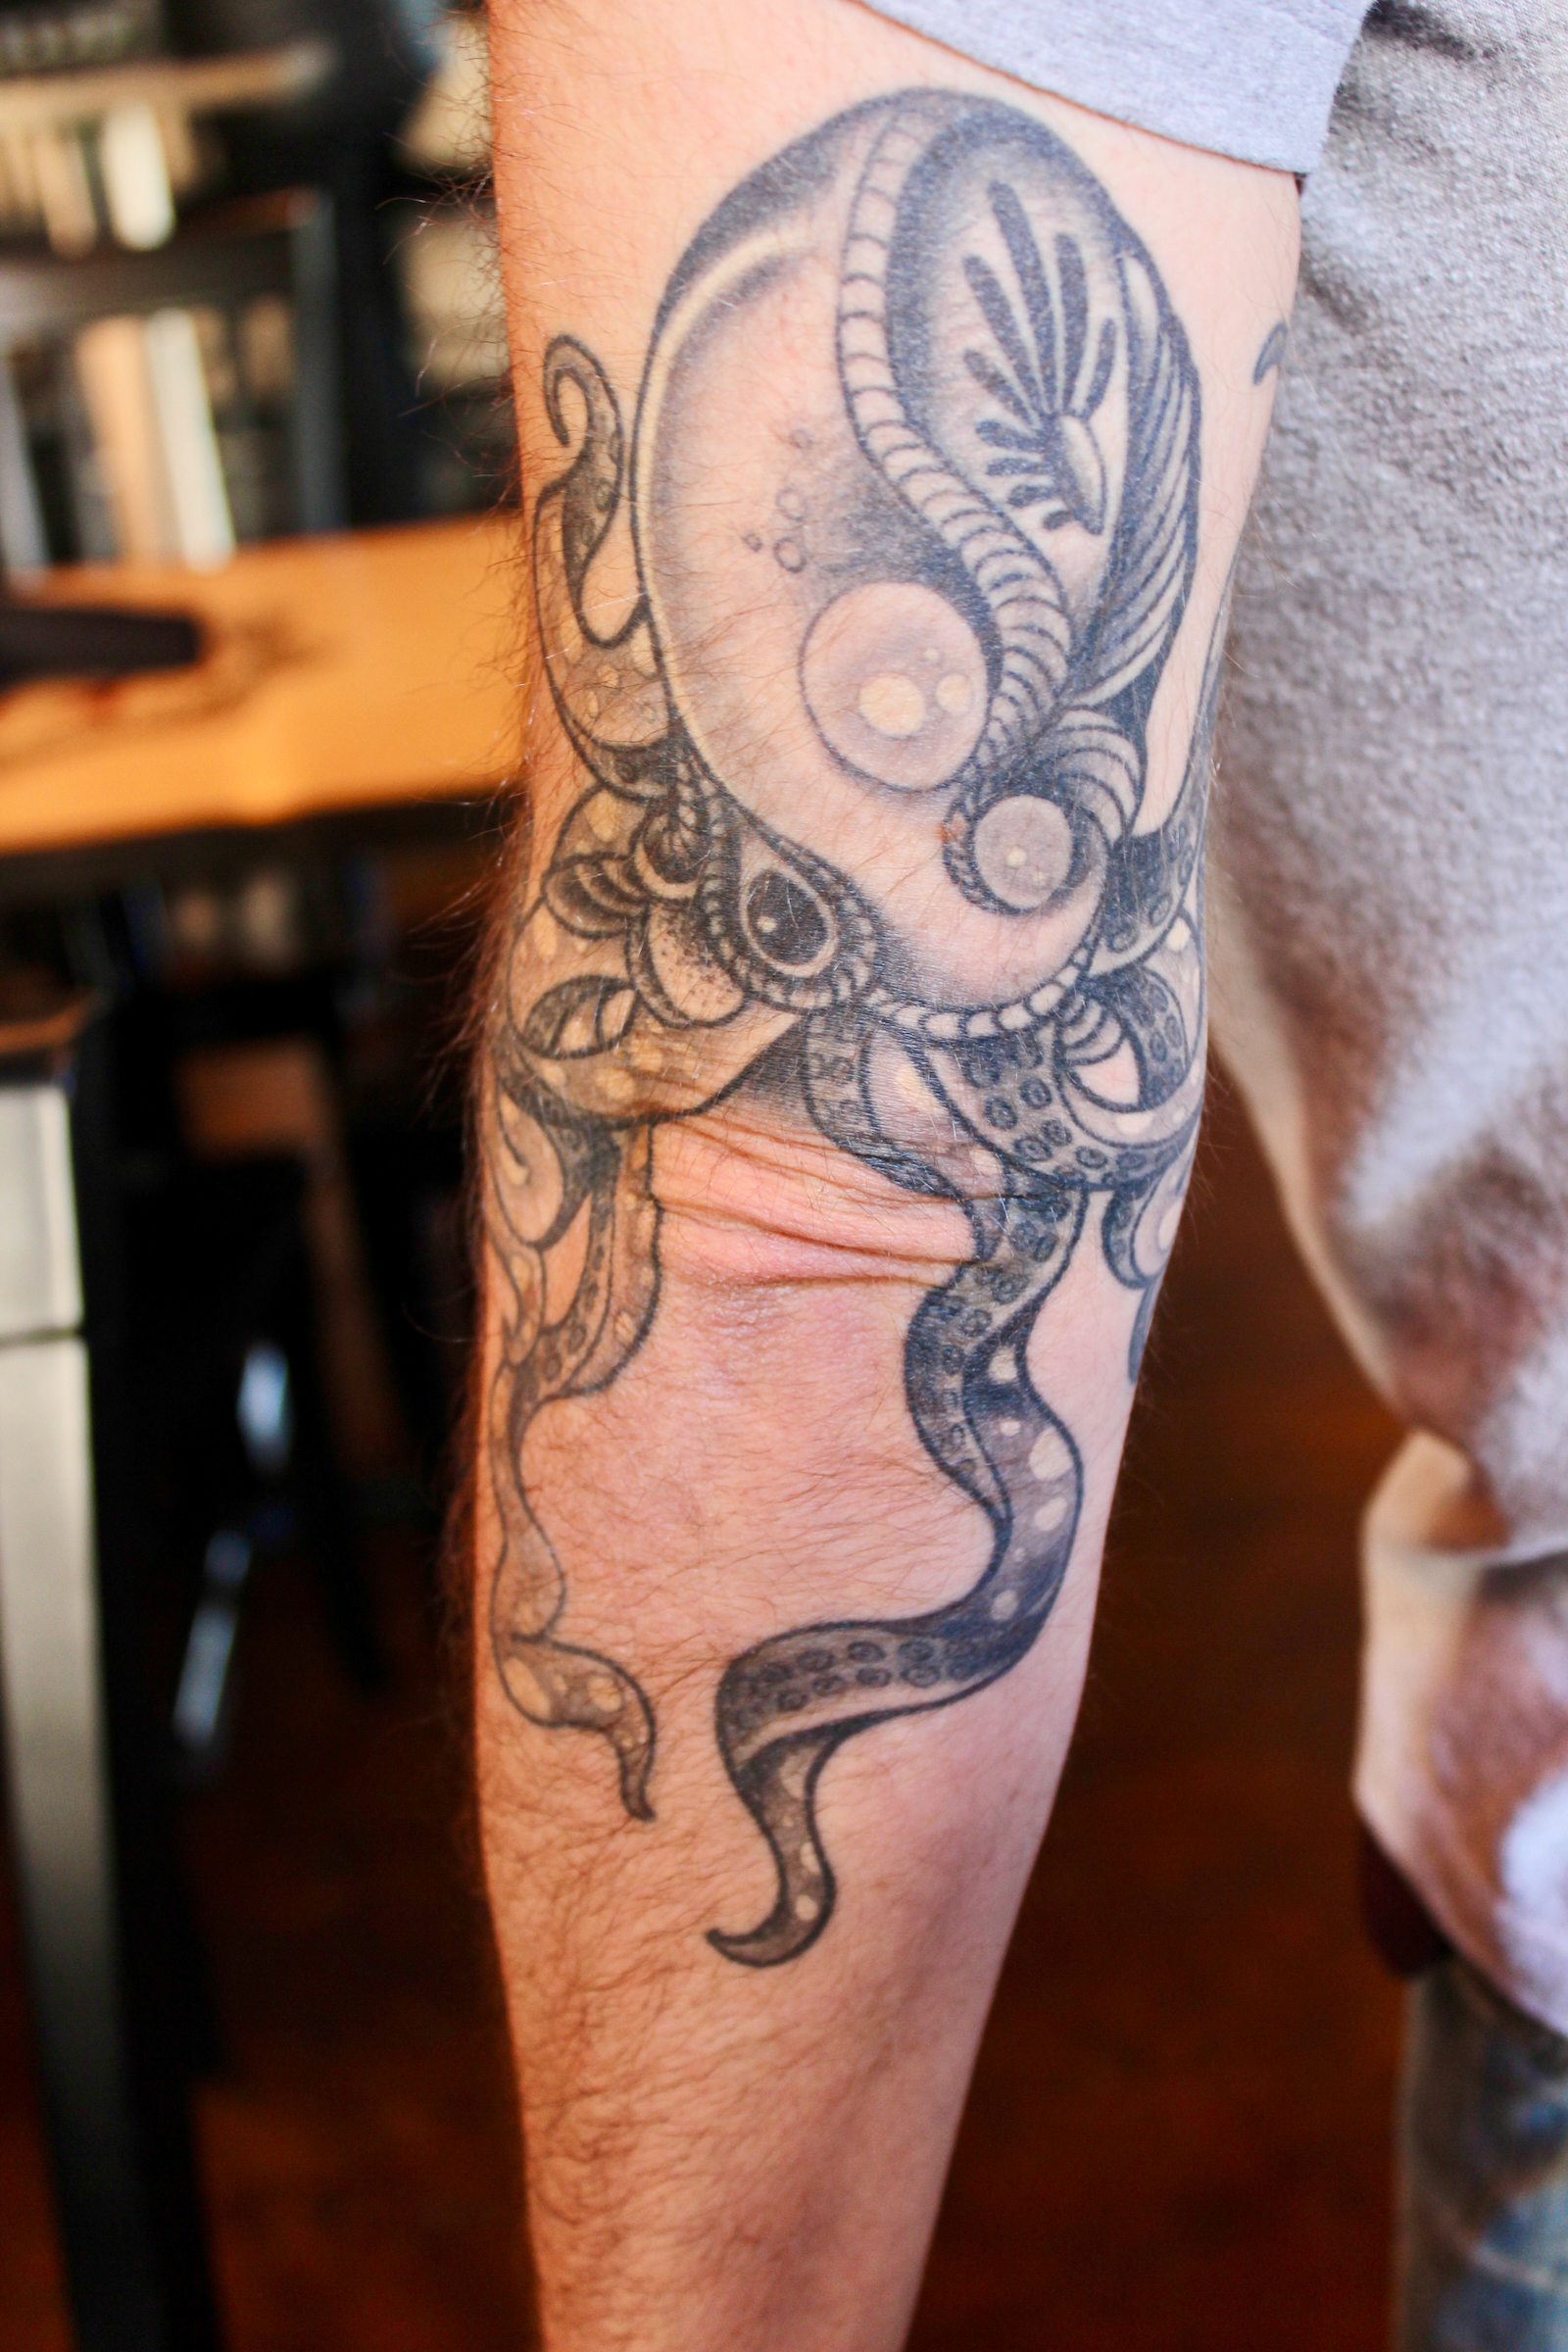 Jacobs' Octopus tattoo